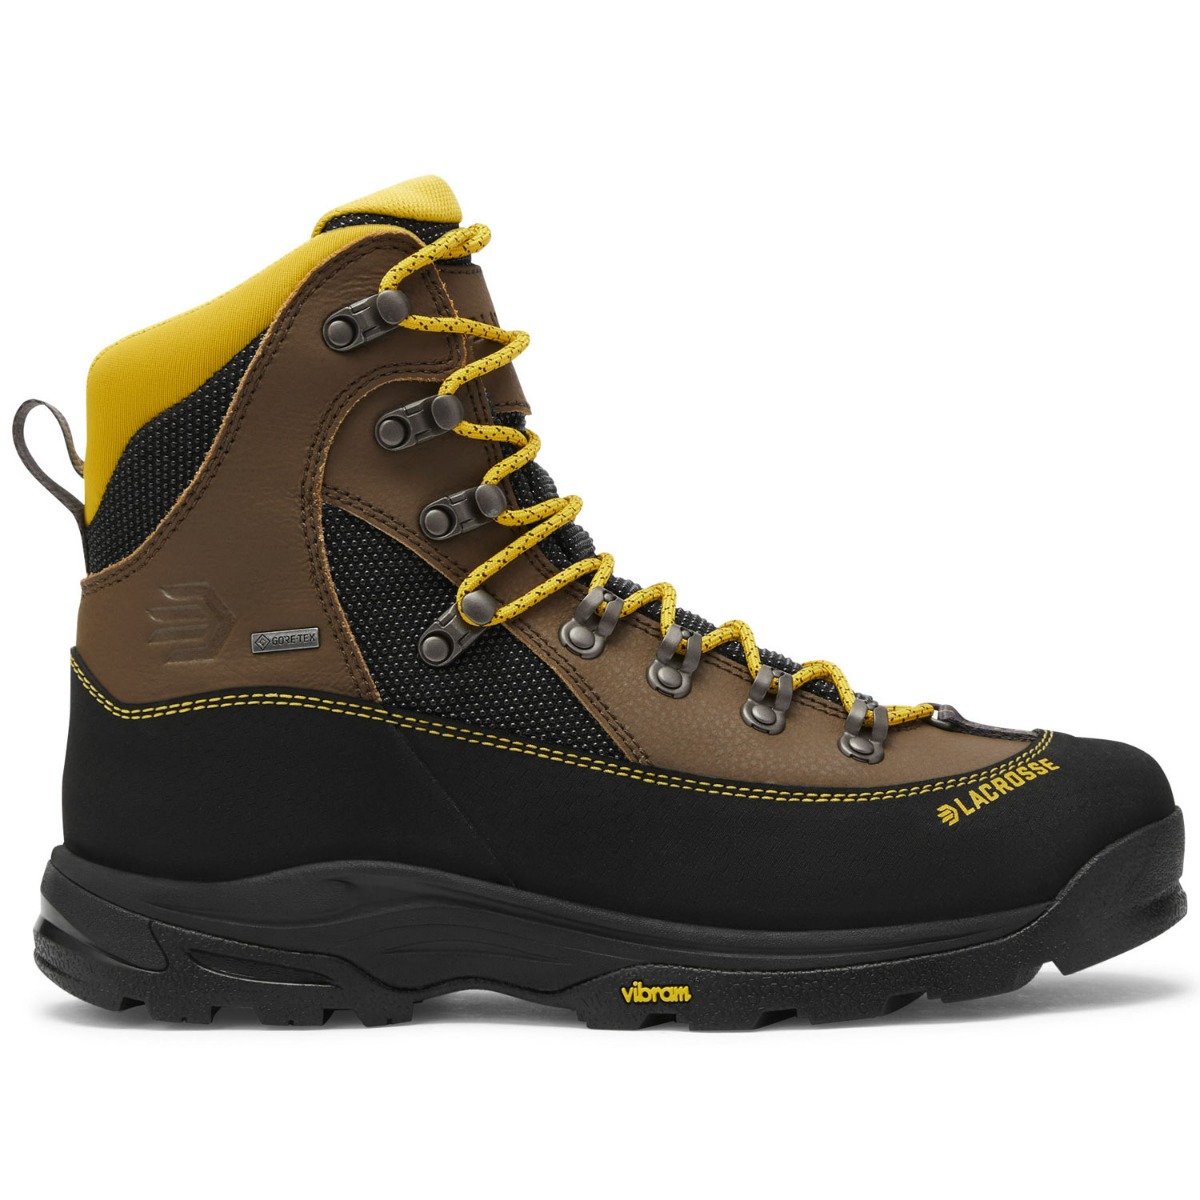 LaCrosse Ursa MS 7in Waterproof Hunting Boots